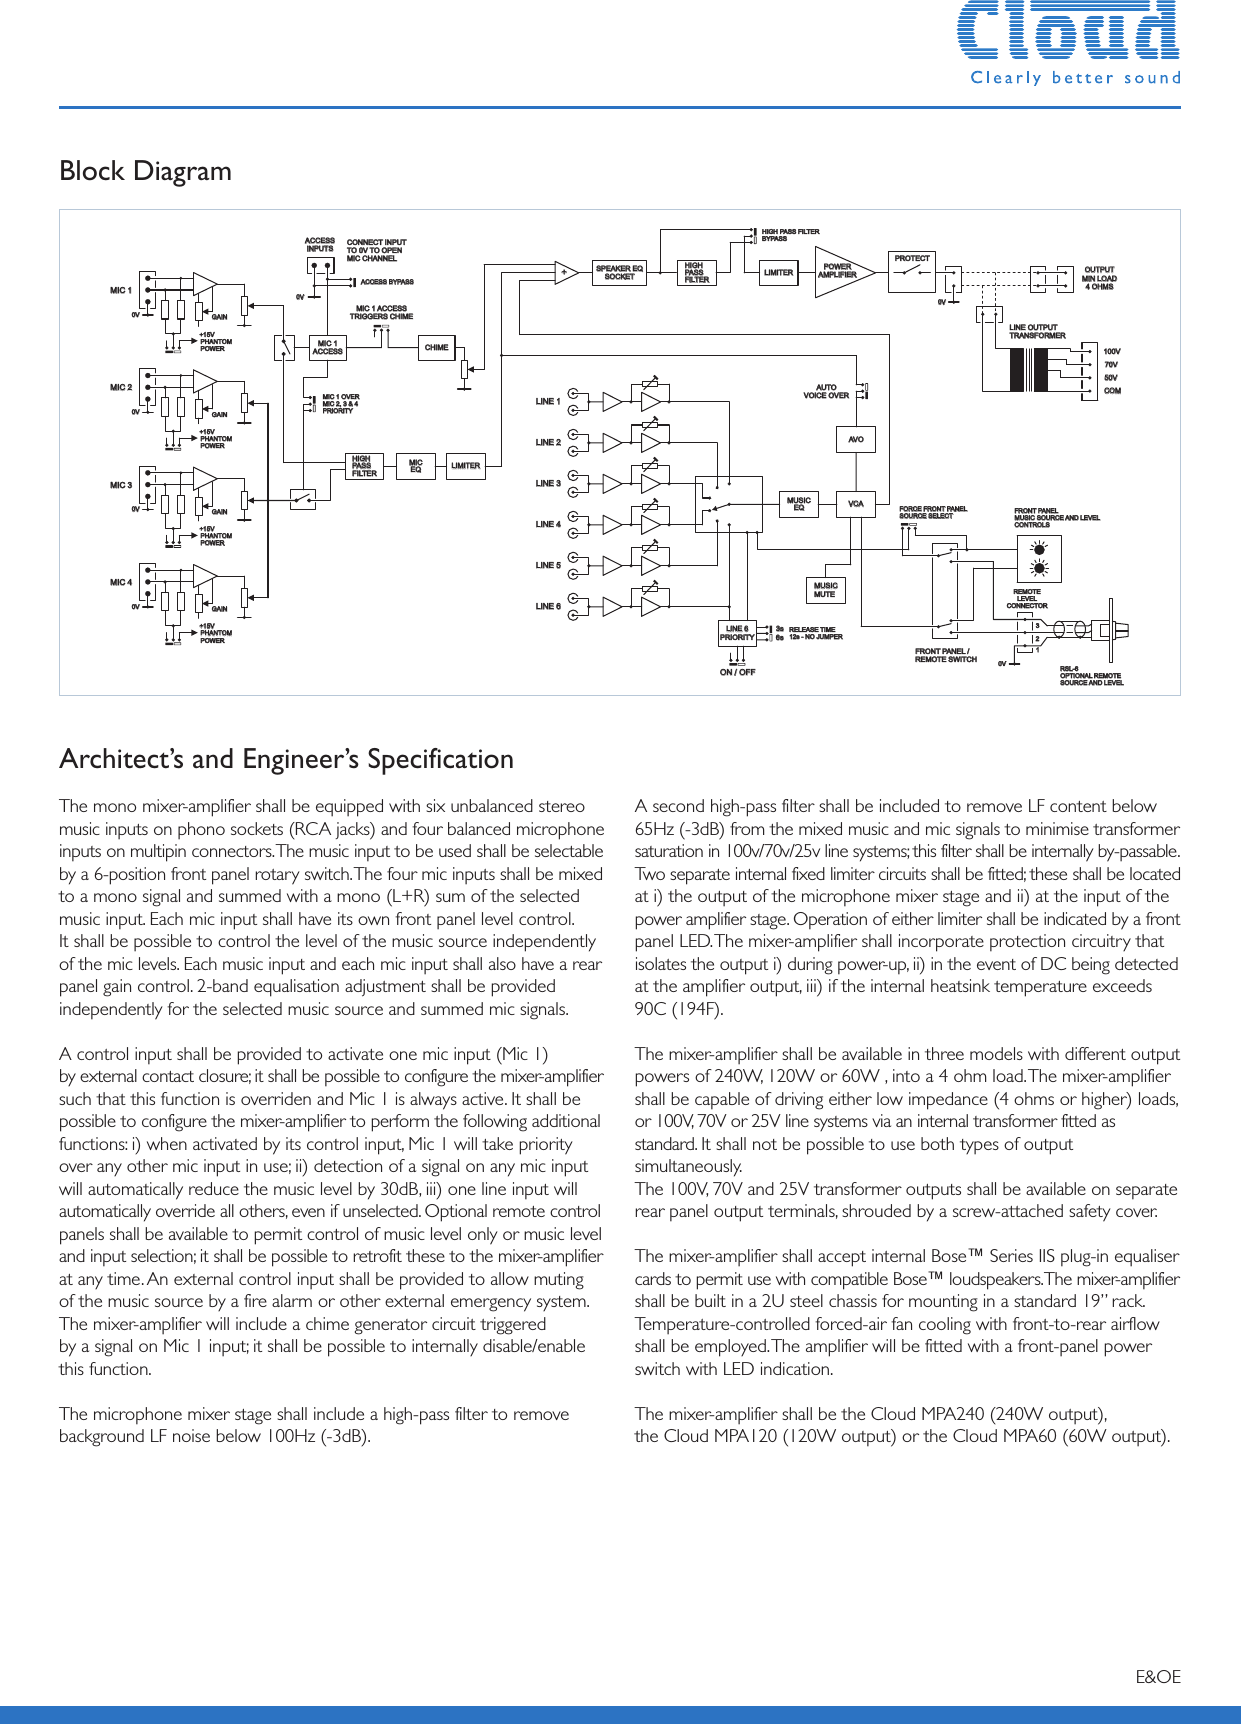 Page 4 of 4 - Cloudmpa240 Ut 1 User Manual